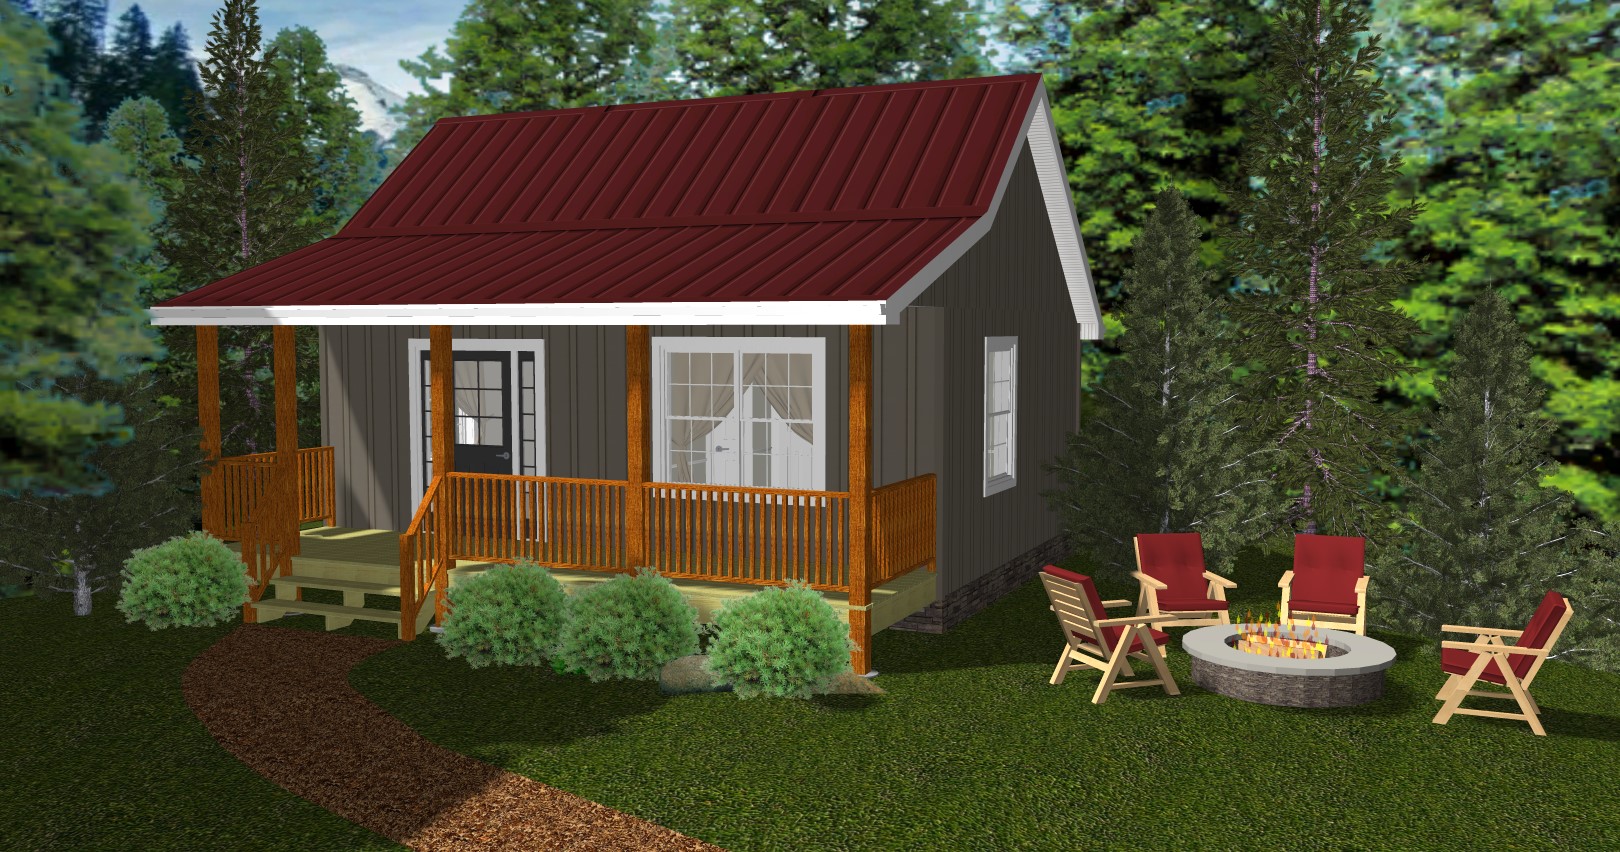 Tiny House Plan With Loft 495 SQ FT Construction Concept Design Build ...